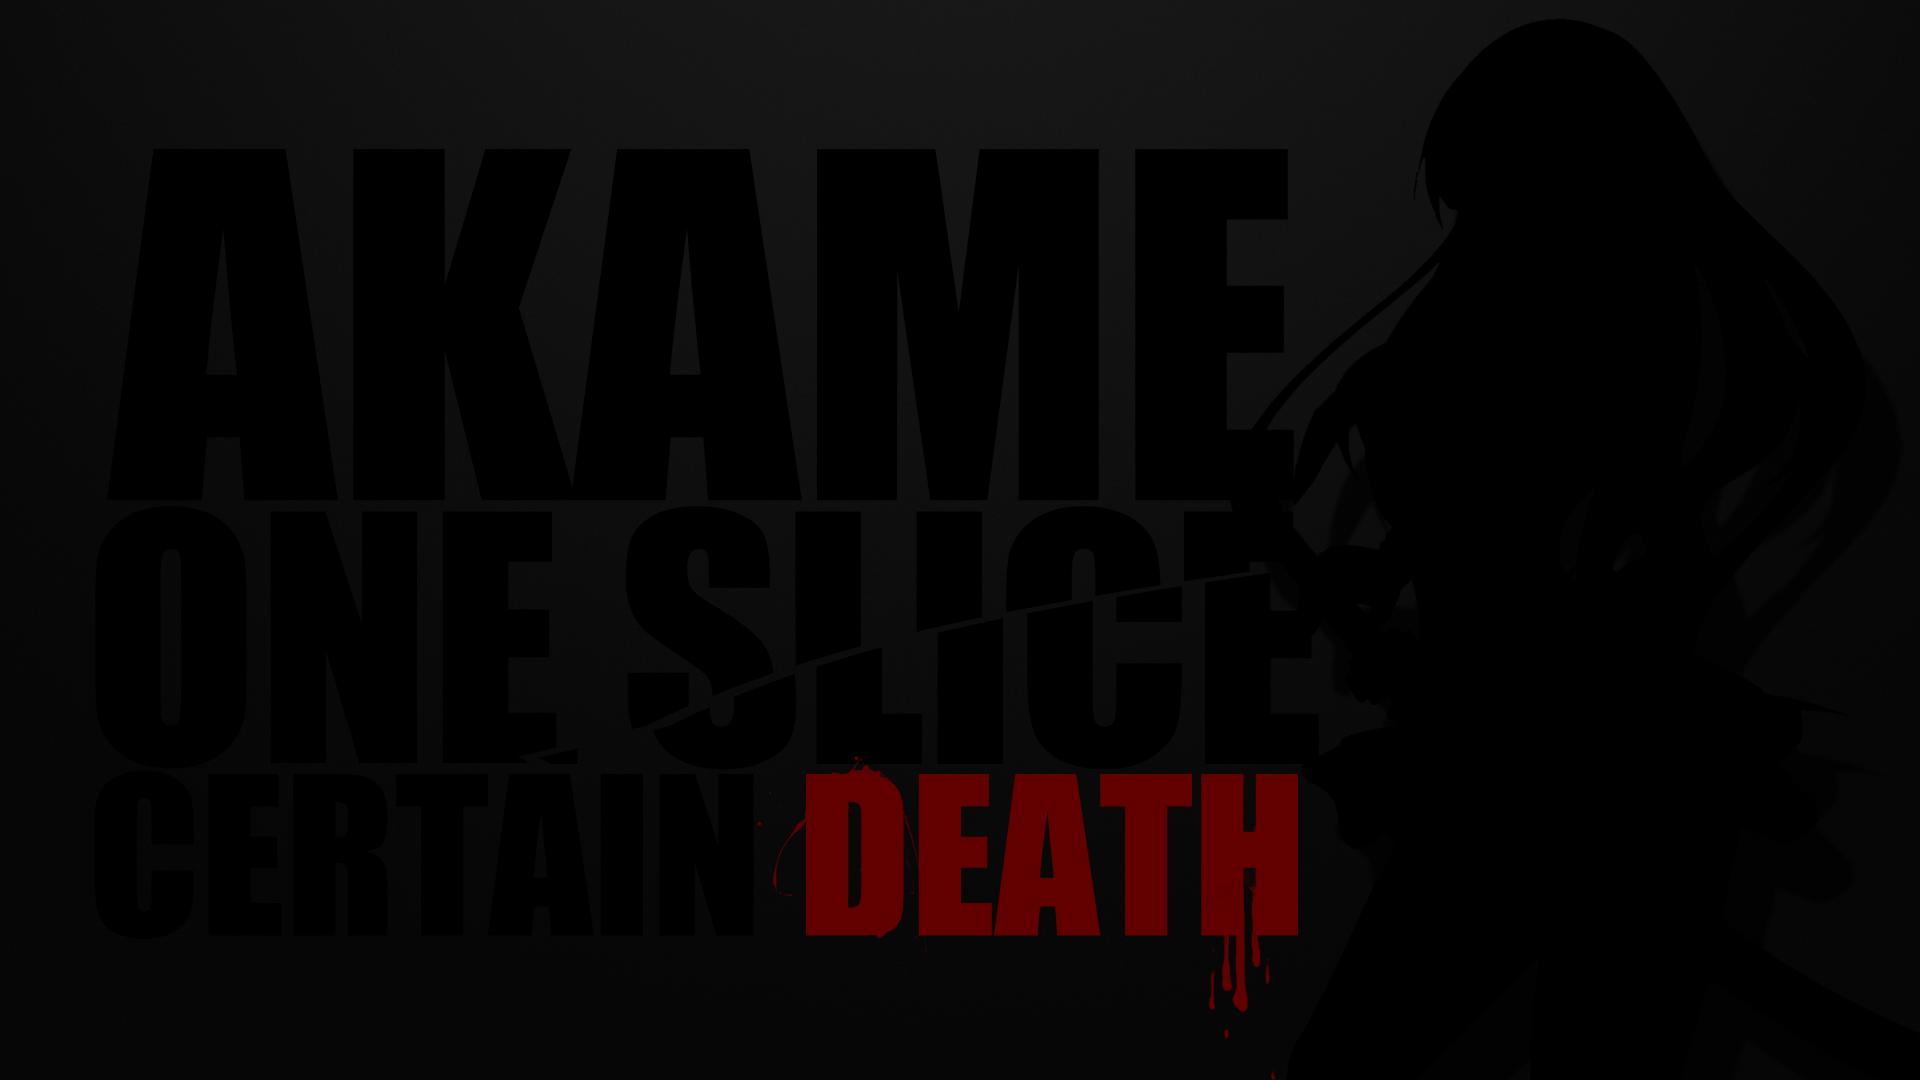 Akame Ga Kill! at 2048 x 2048 iPad size wallpapers HD quality